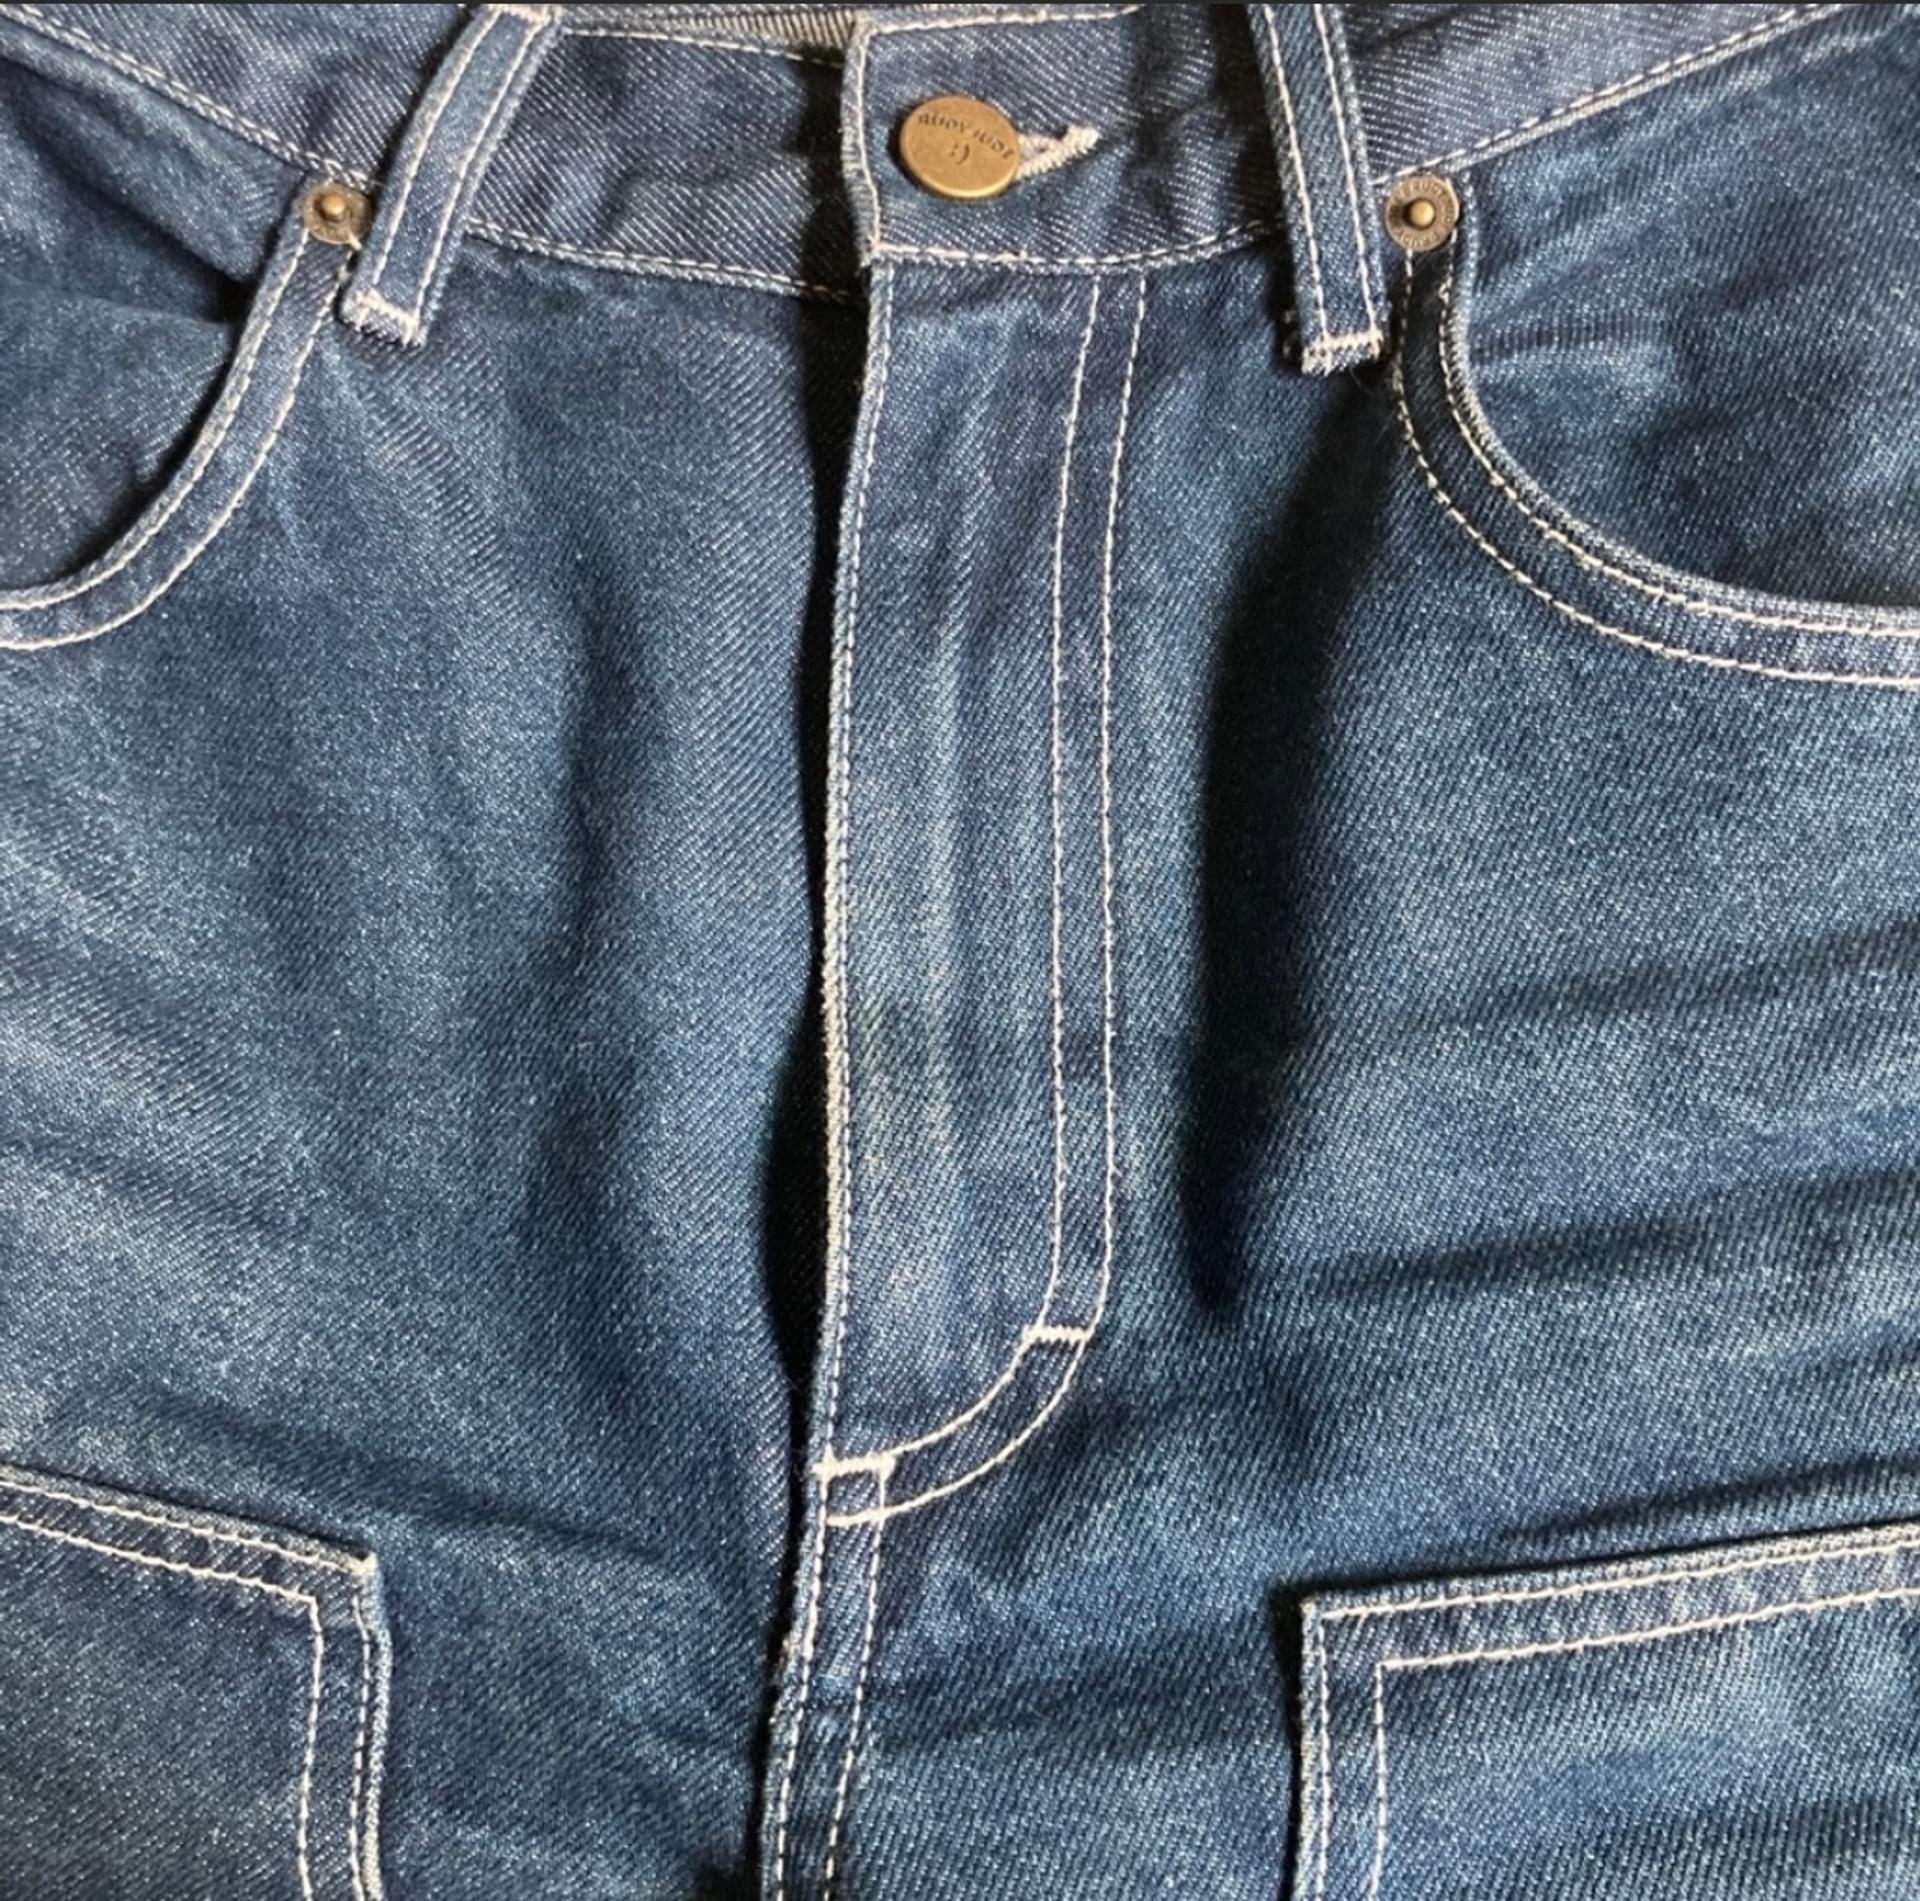 Rudy Jude Utility Jeans (1) | Noihsaf Bazaar